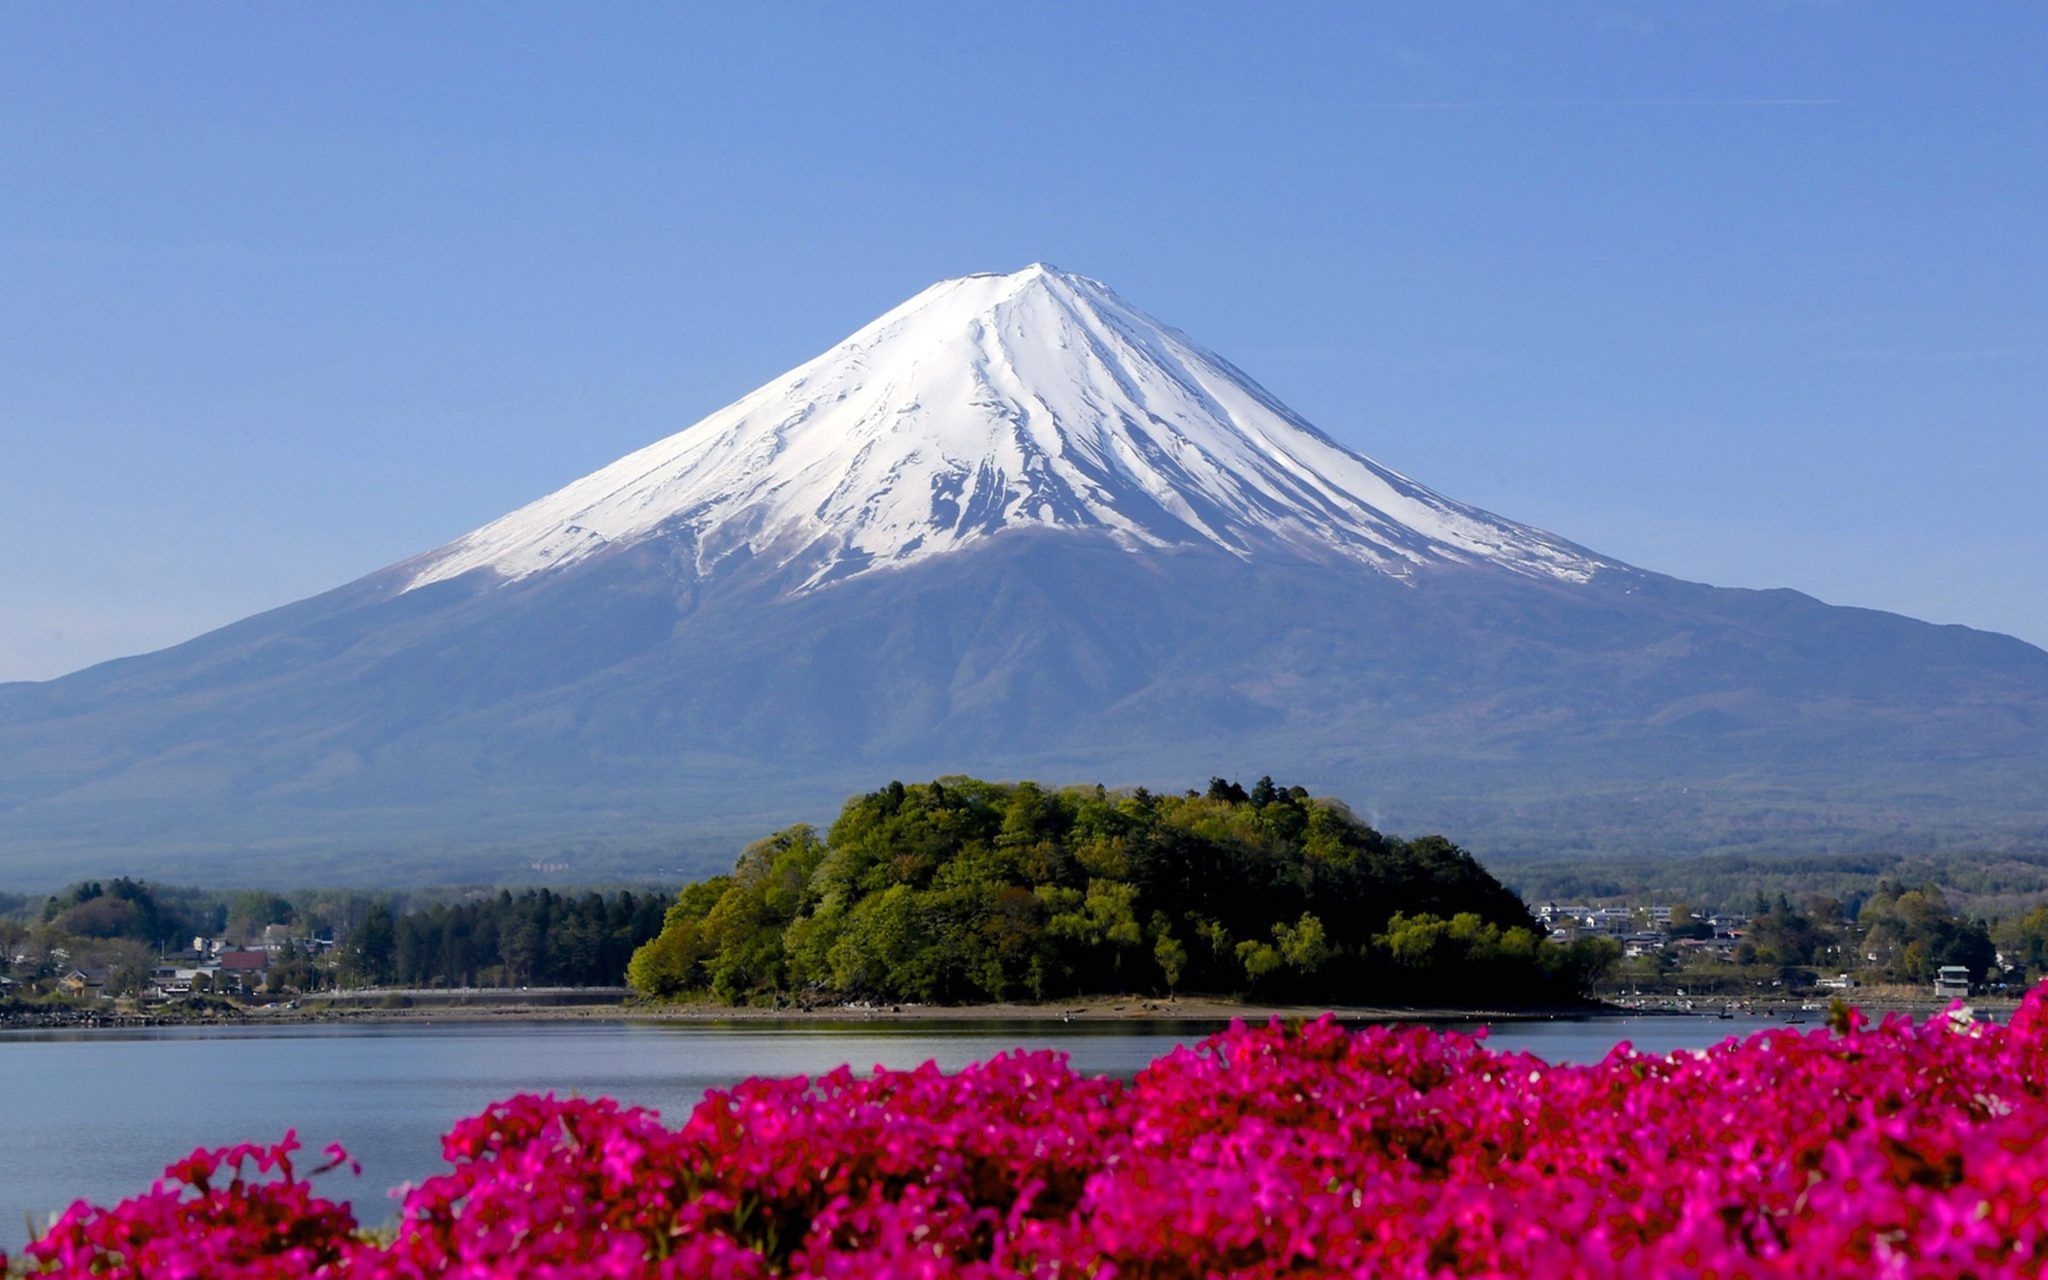 Hilarious facts about Japan’s famous Mount Fuji